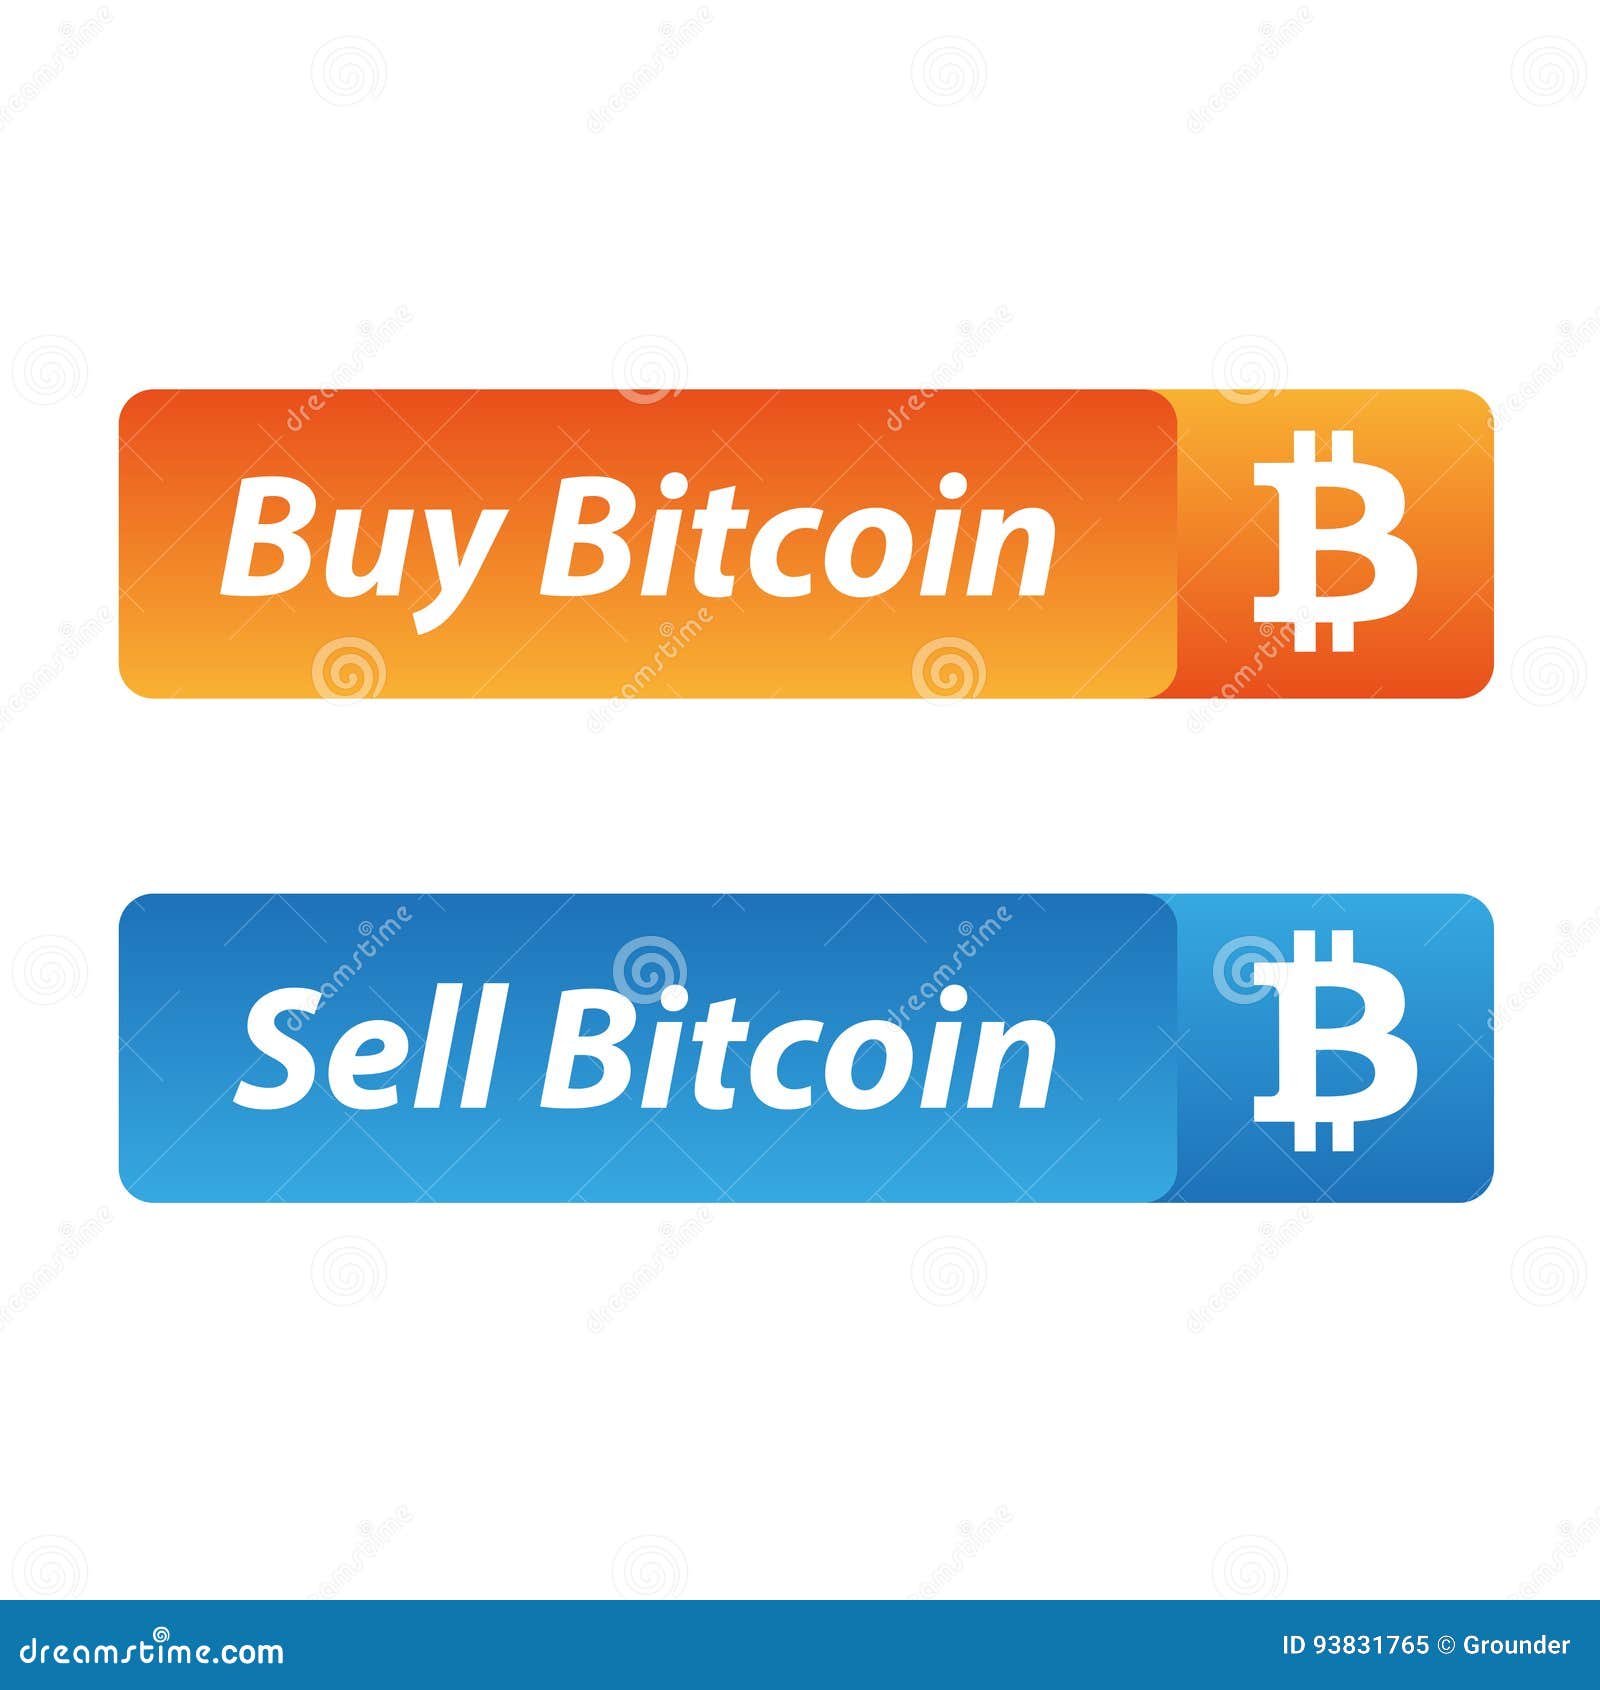 buy bitcoin at credit union